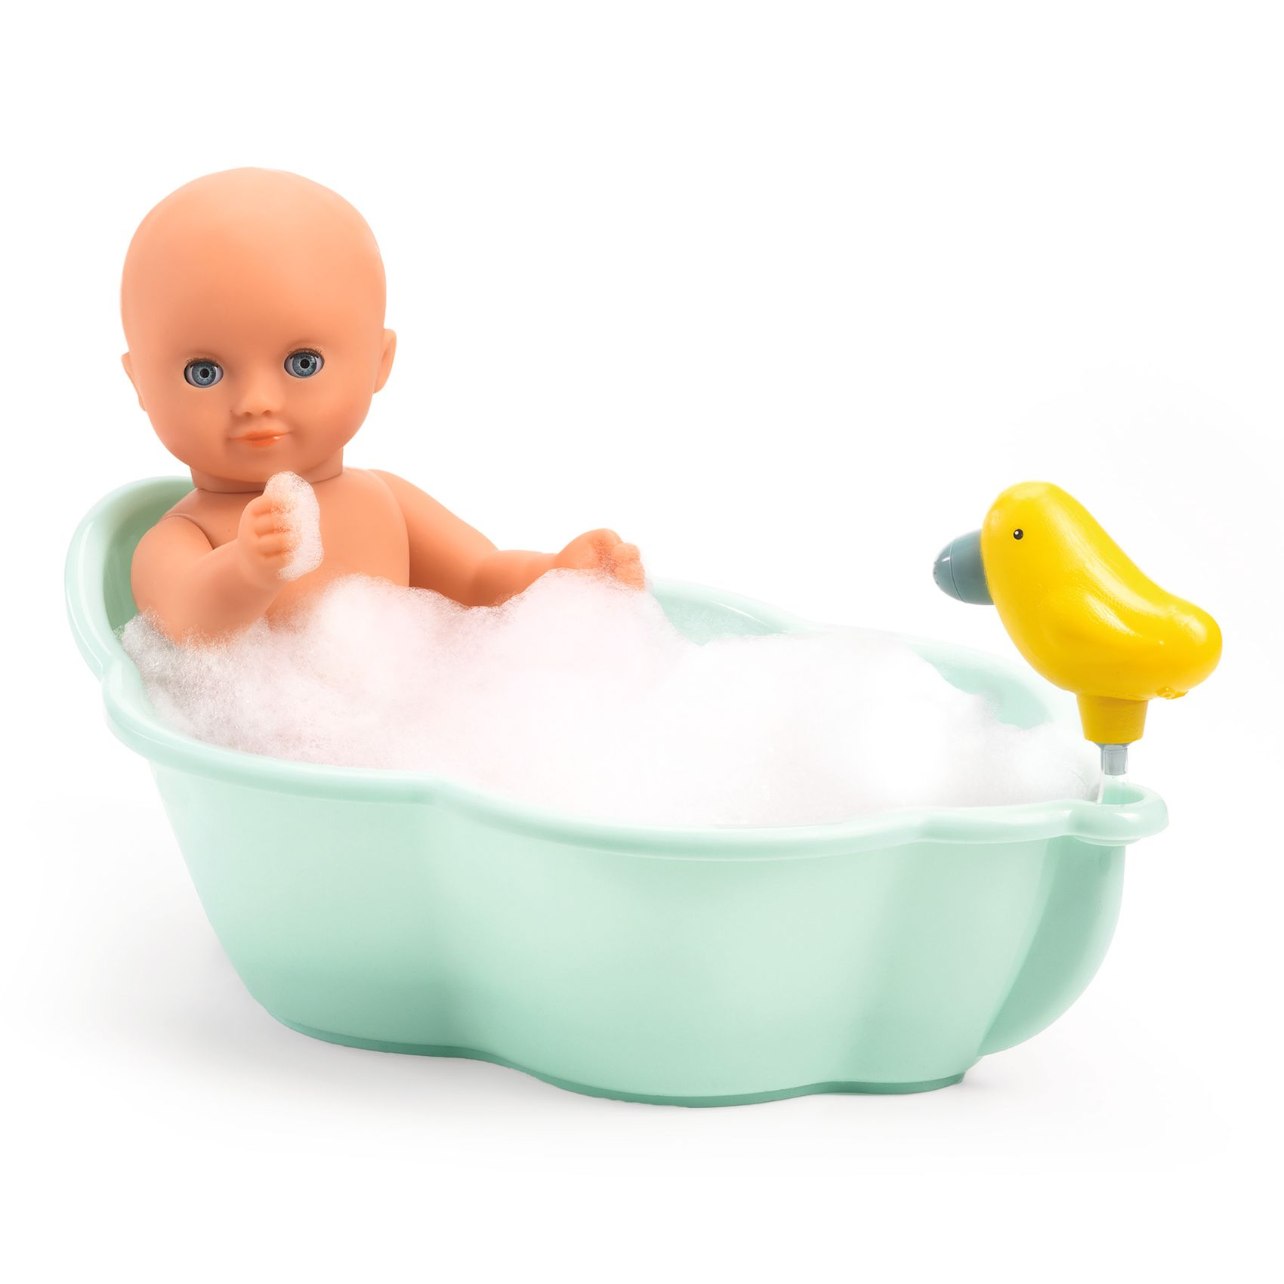 Djeco Doll Bathtub